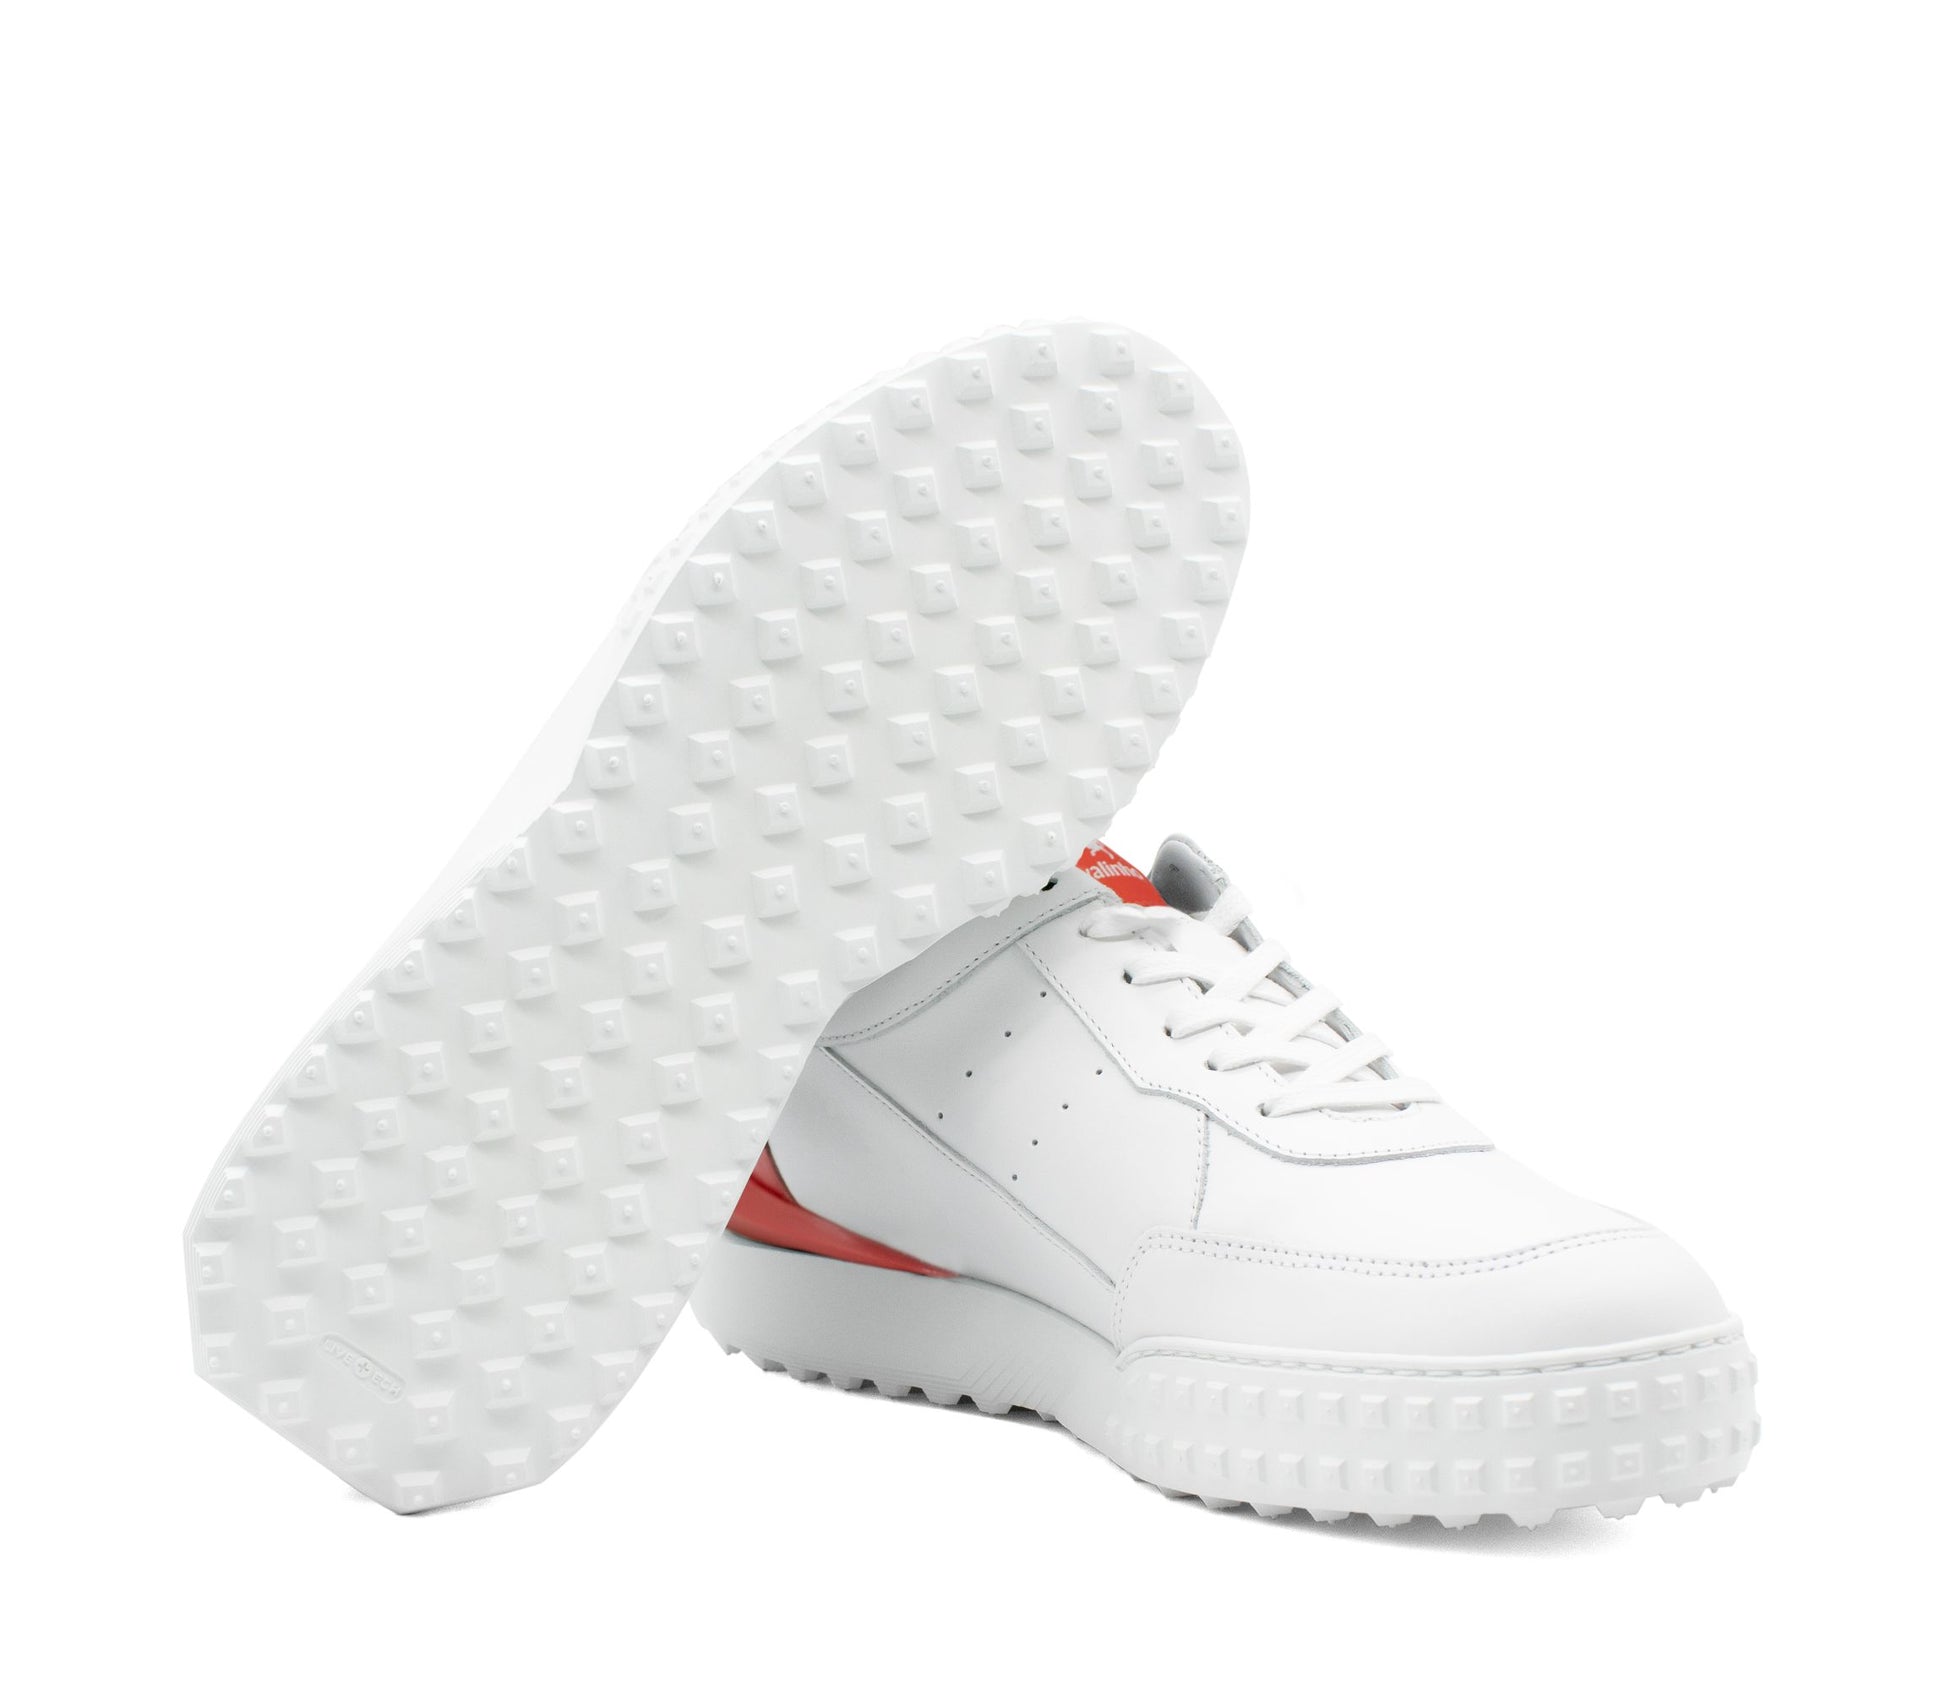 Cavalinho Authentic Sneakers - Red - 48080002.04_6